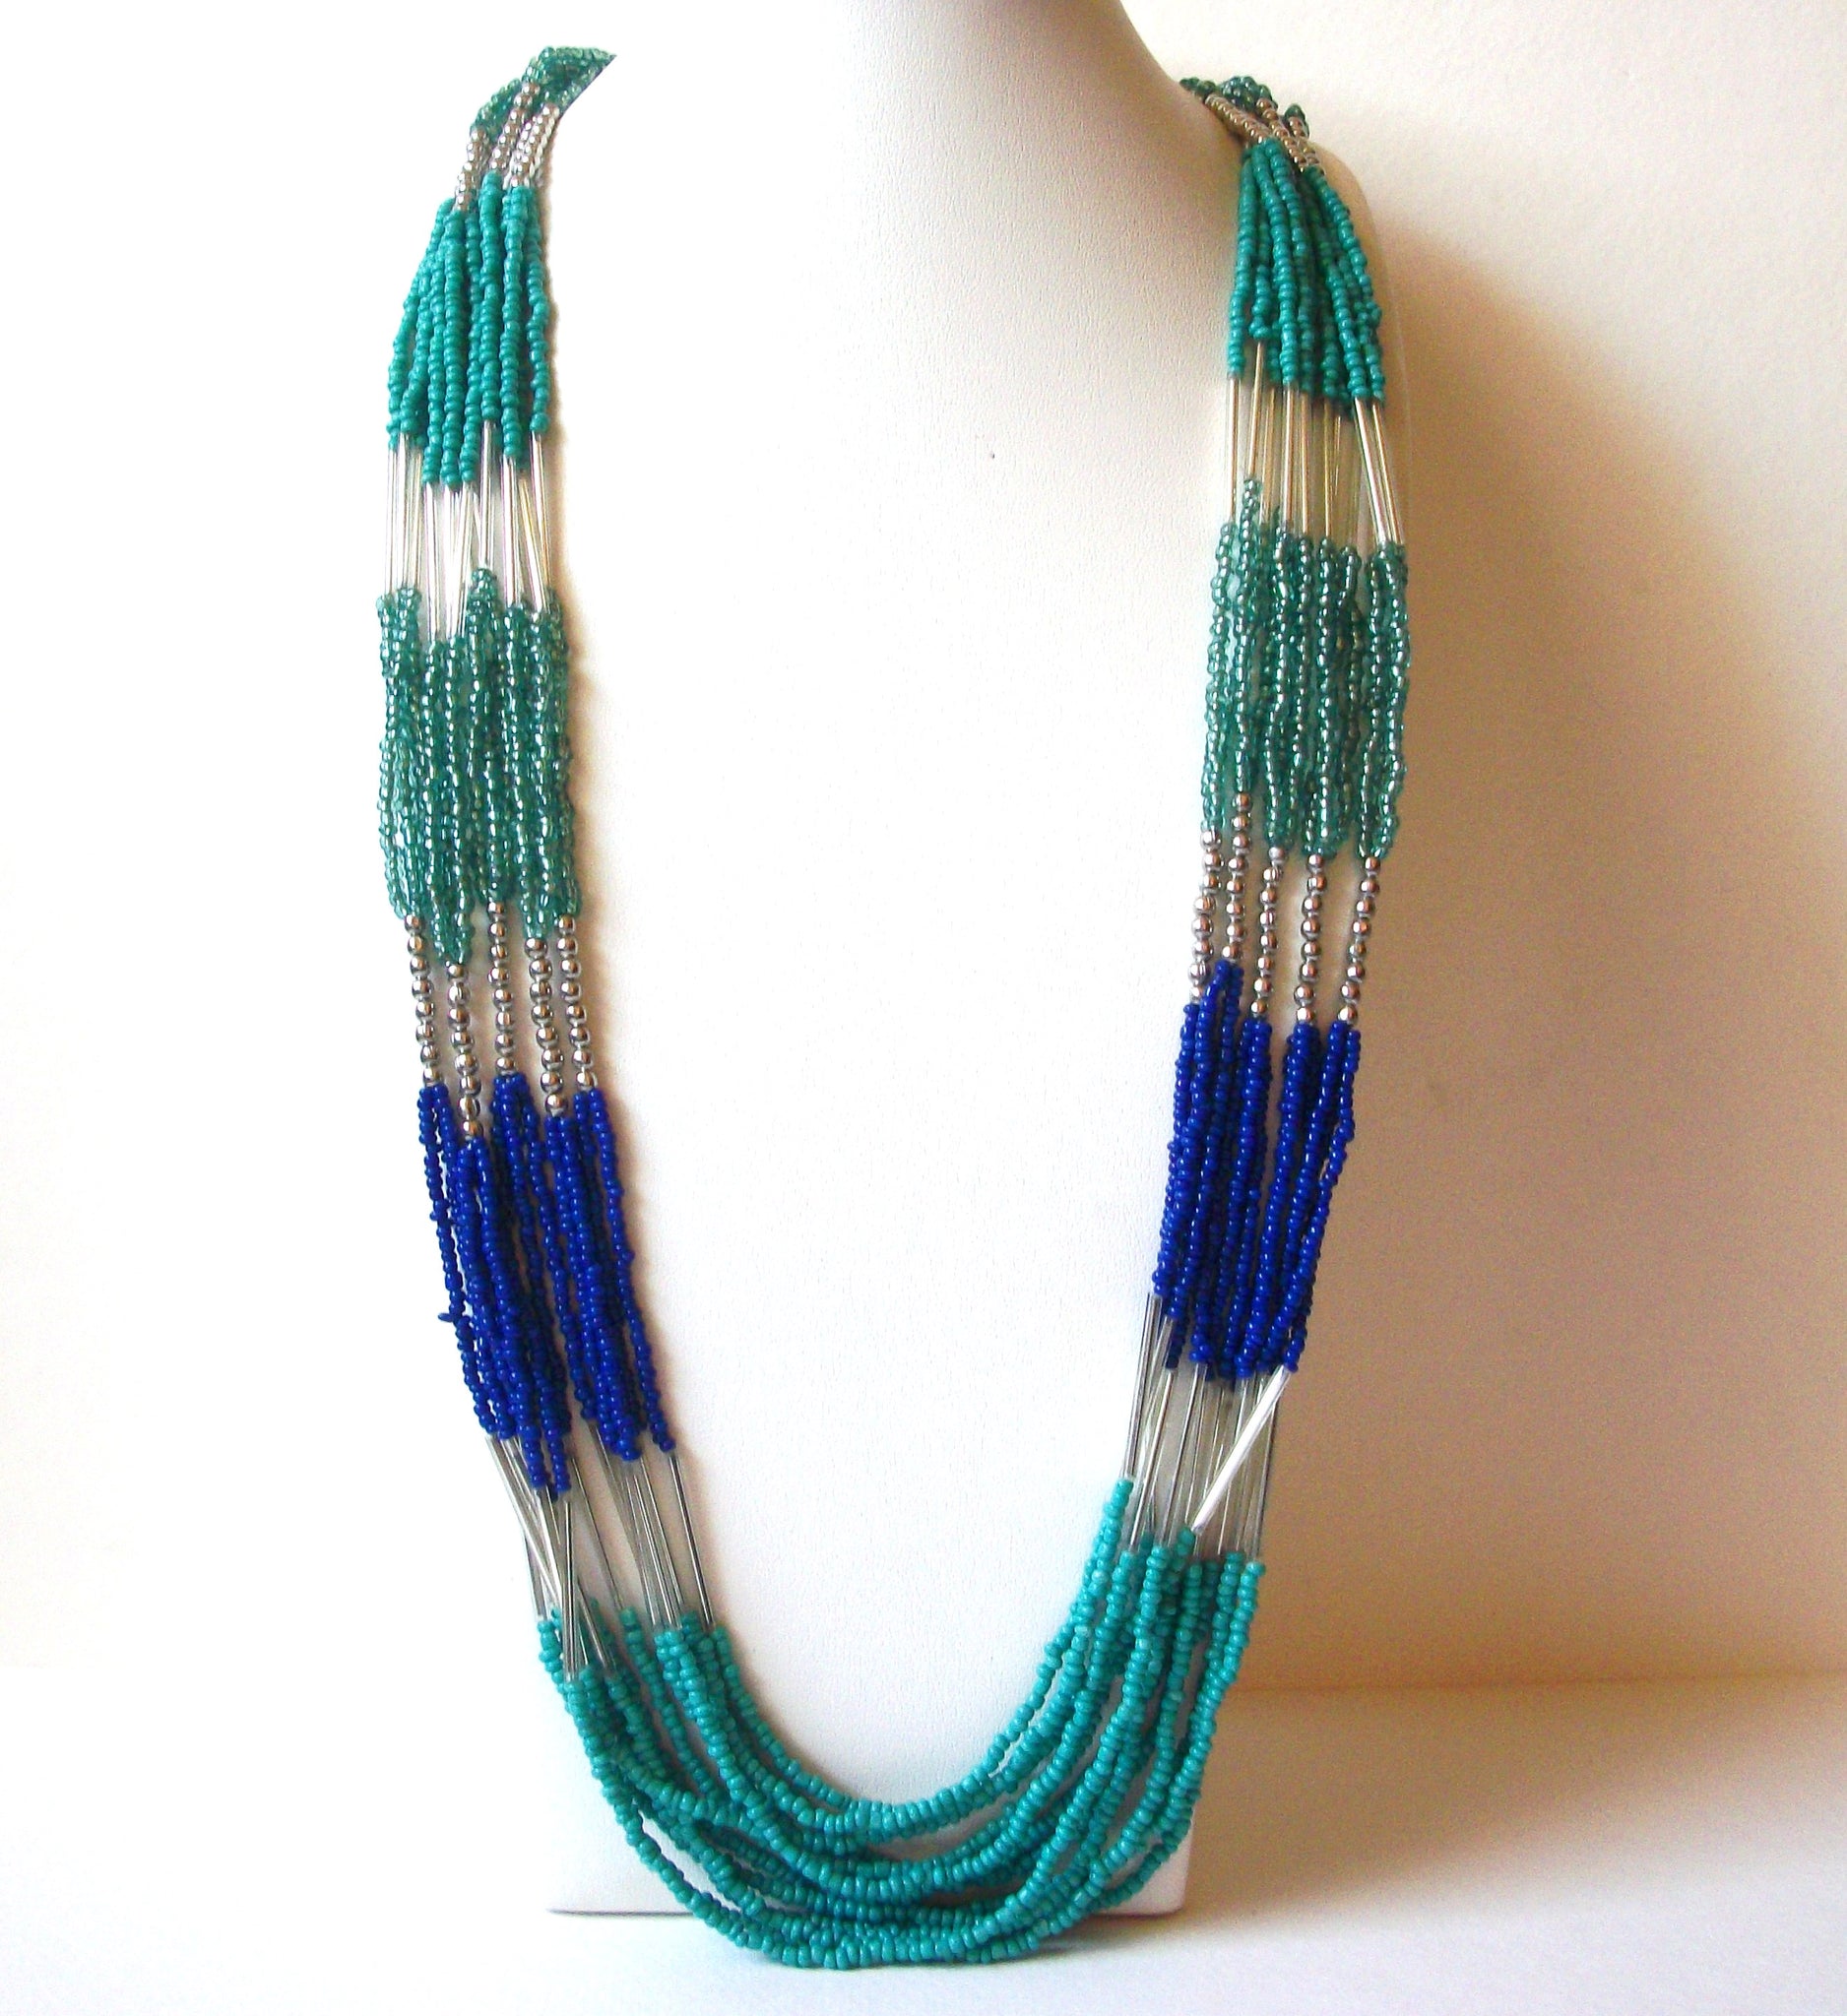 Vintage Southwestern Glass Beads Necklace 71220